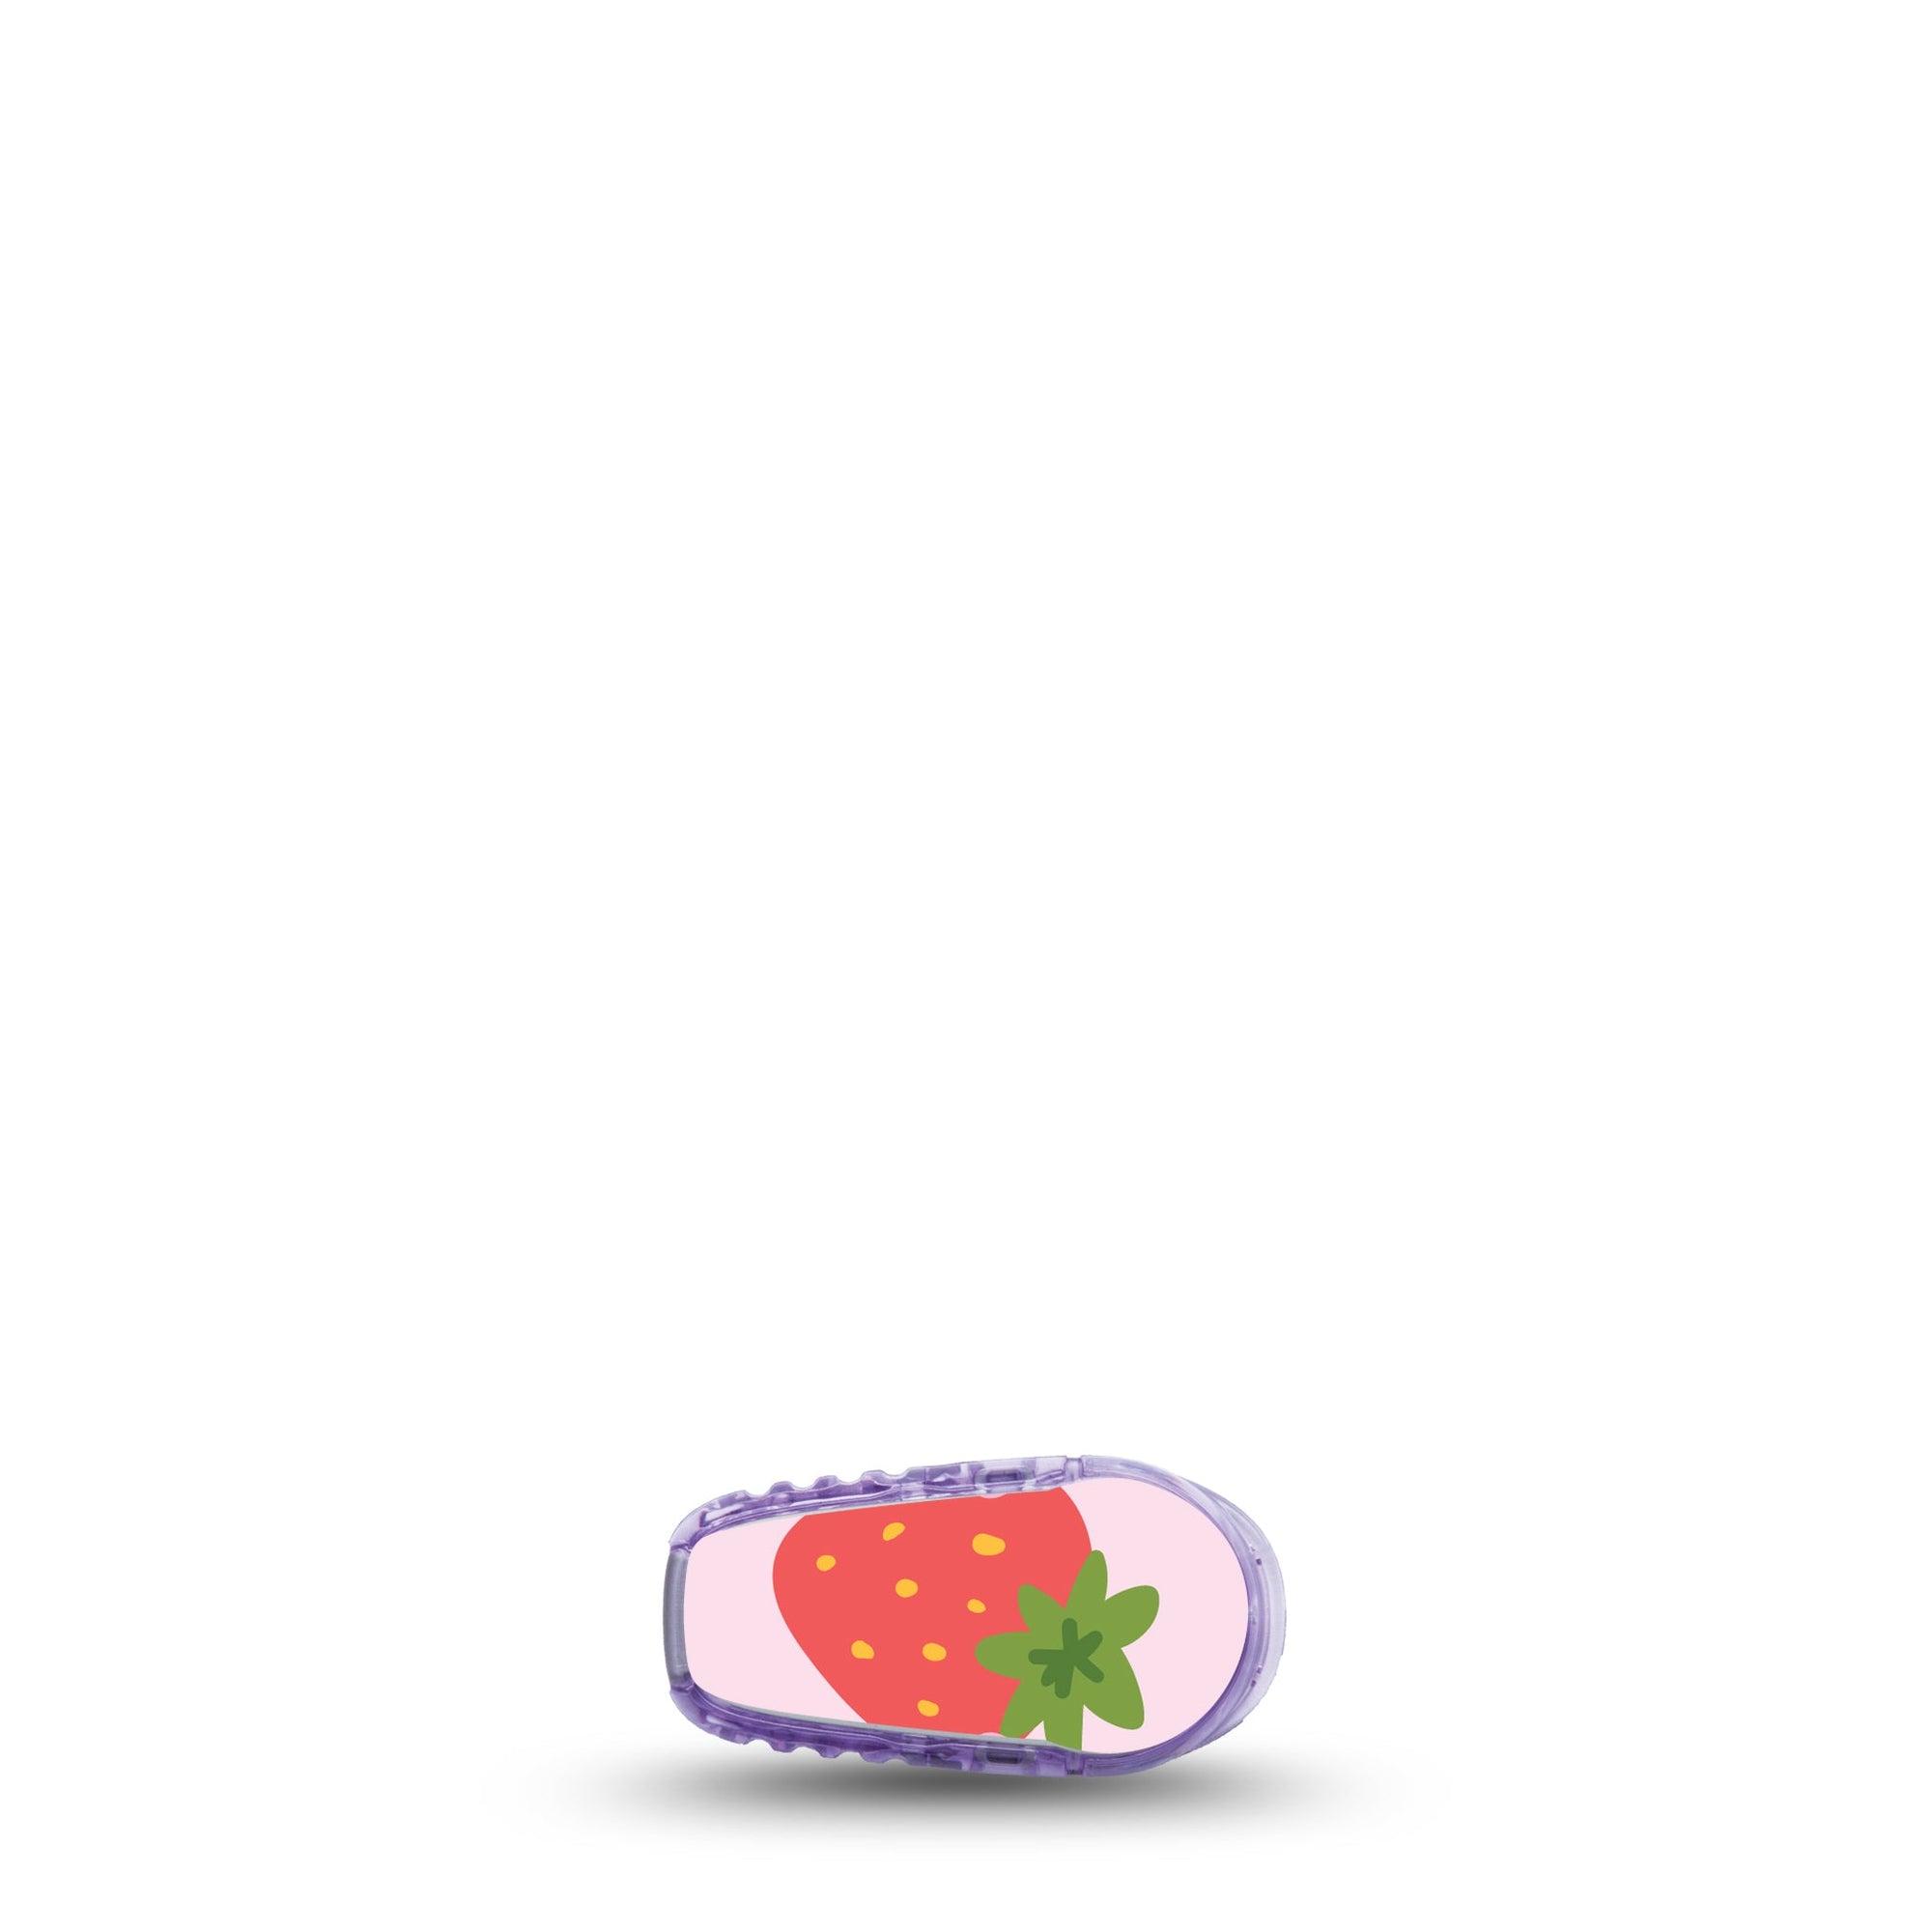 ExpressionMed Strawberry Piglet Dexcom G6 Sticker Single Sticker piglet treats Decorative Decal CGM Design